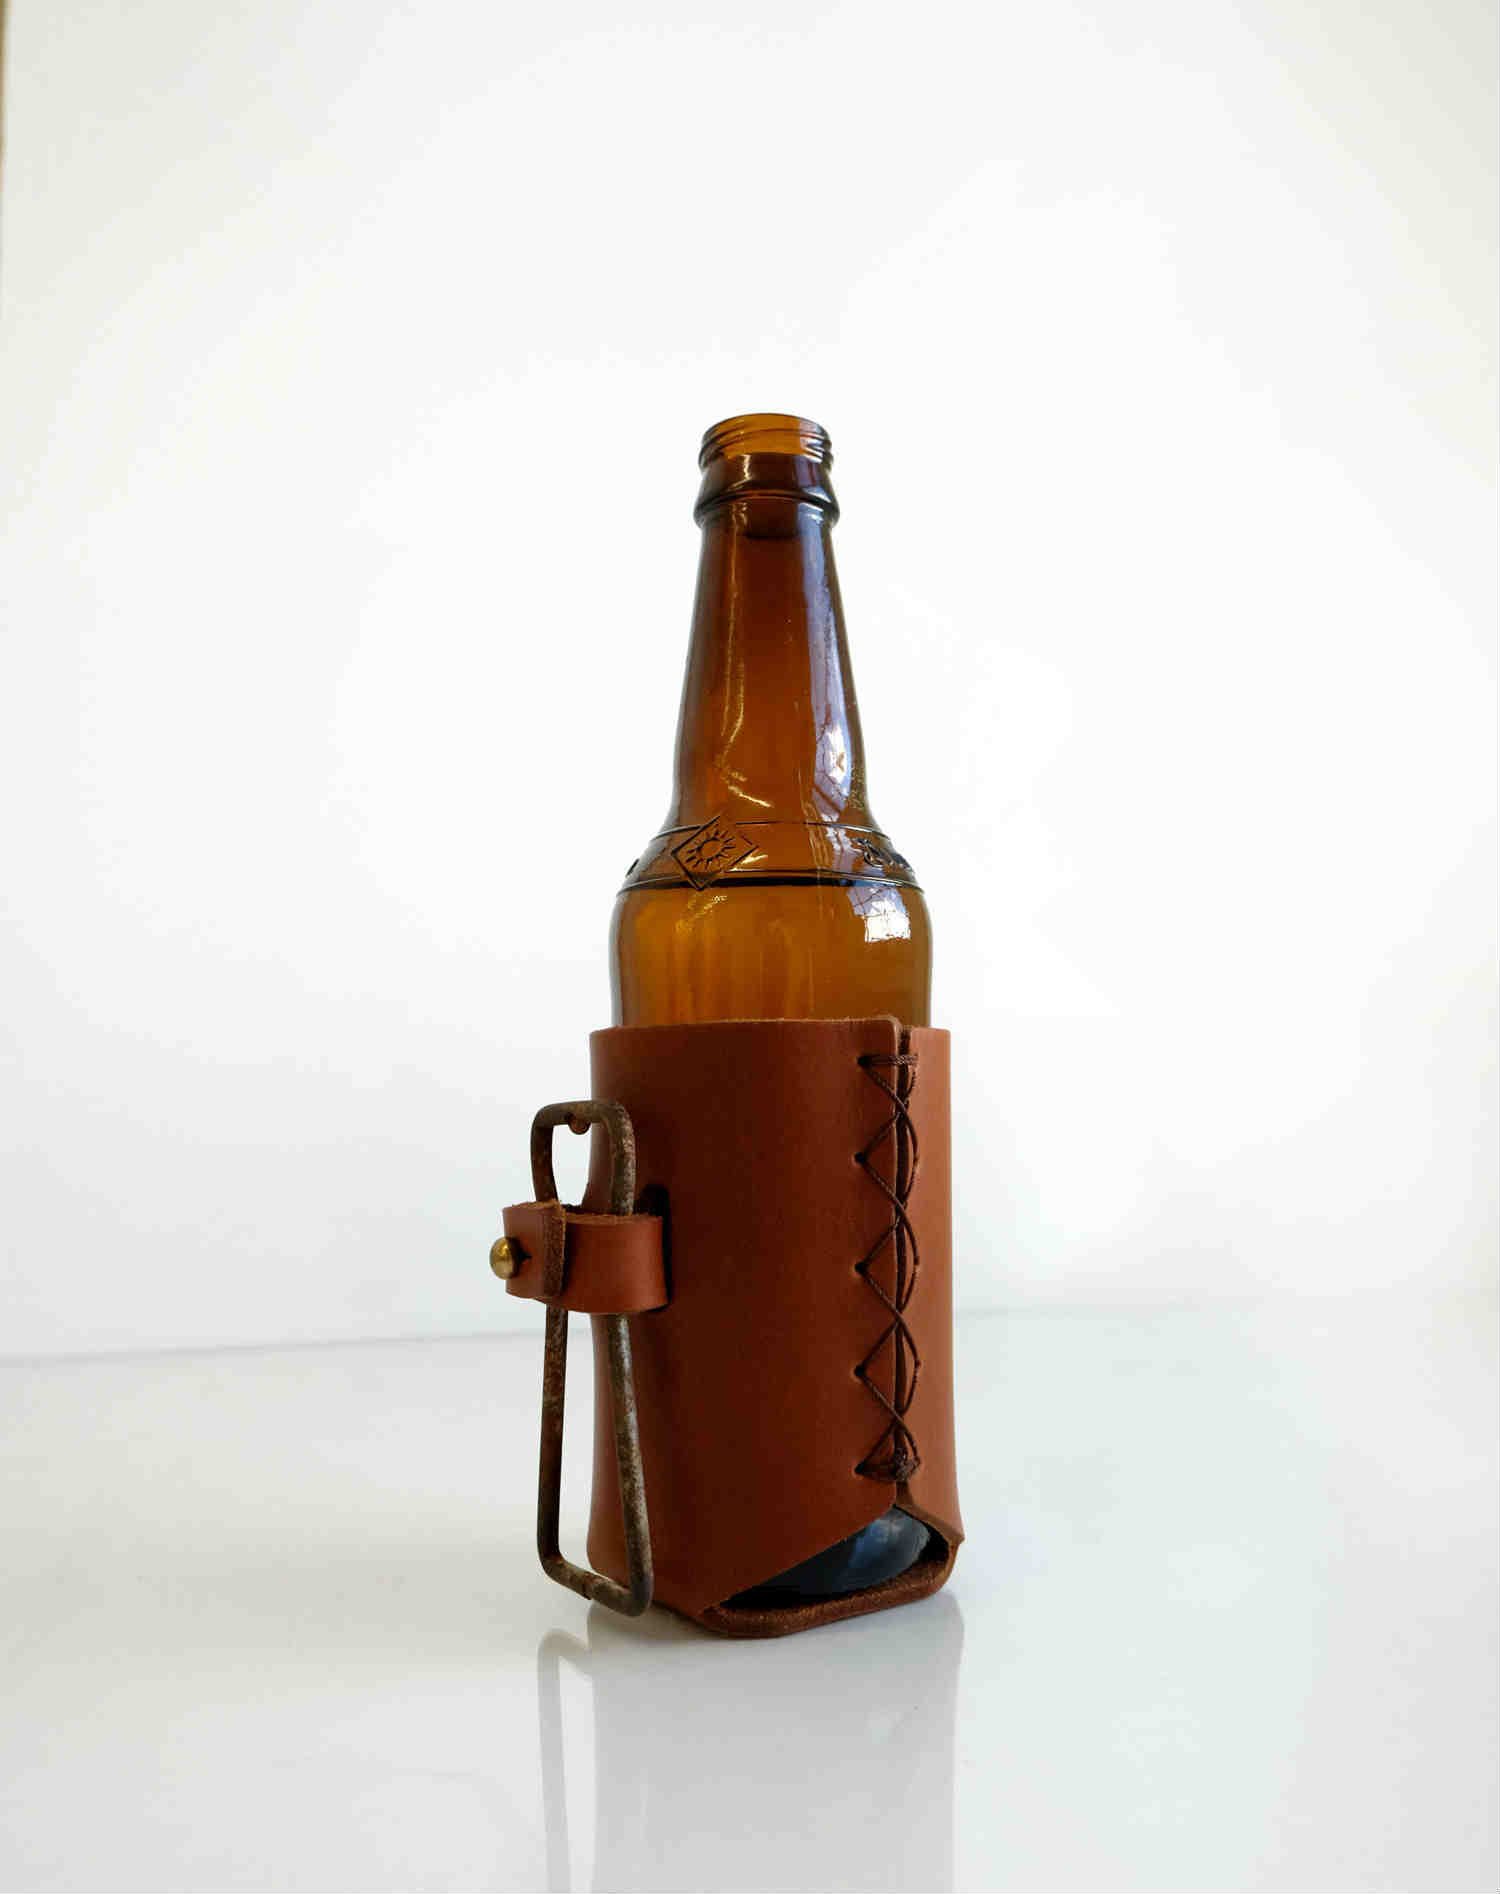 Awl Snap Forge Leather Beer Holder With Vintage Bottle Opener